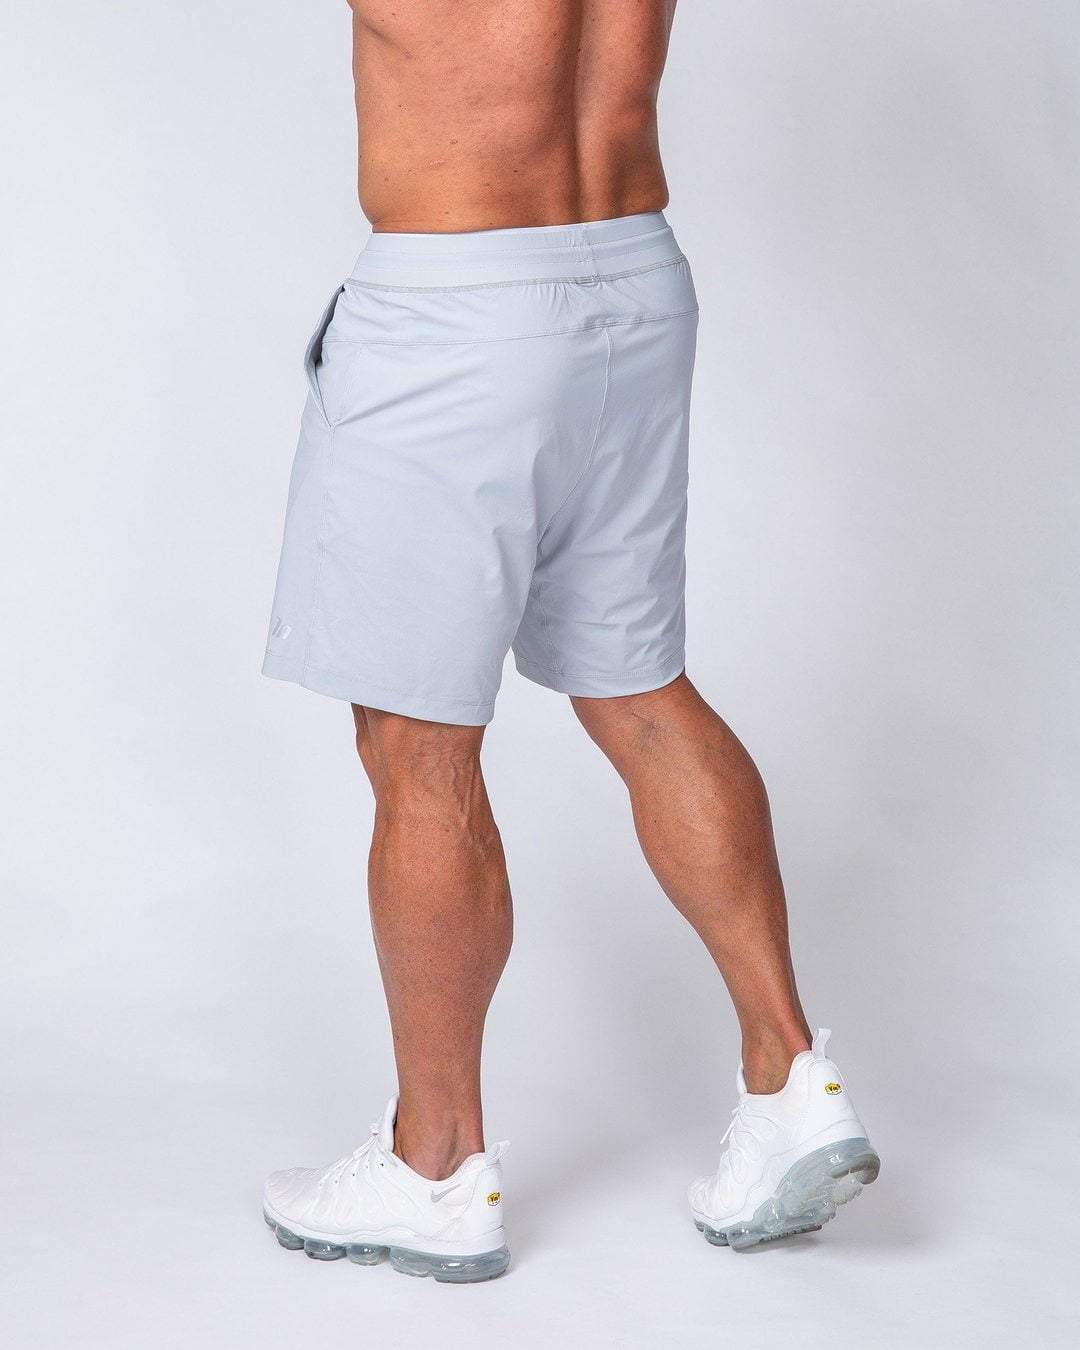 musclenation Mens Training Shorts - Grey